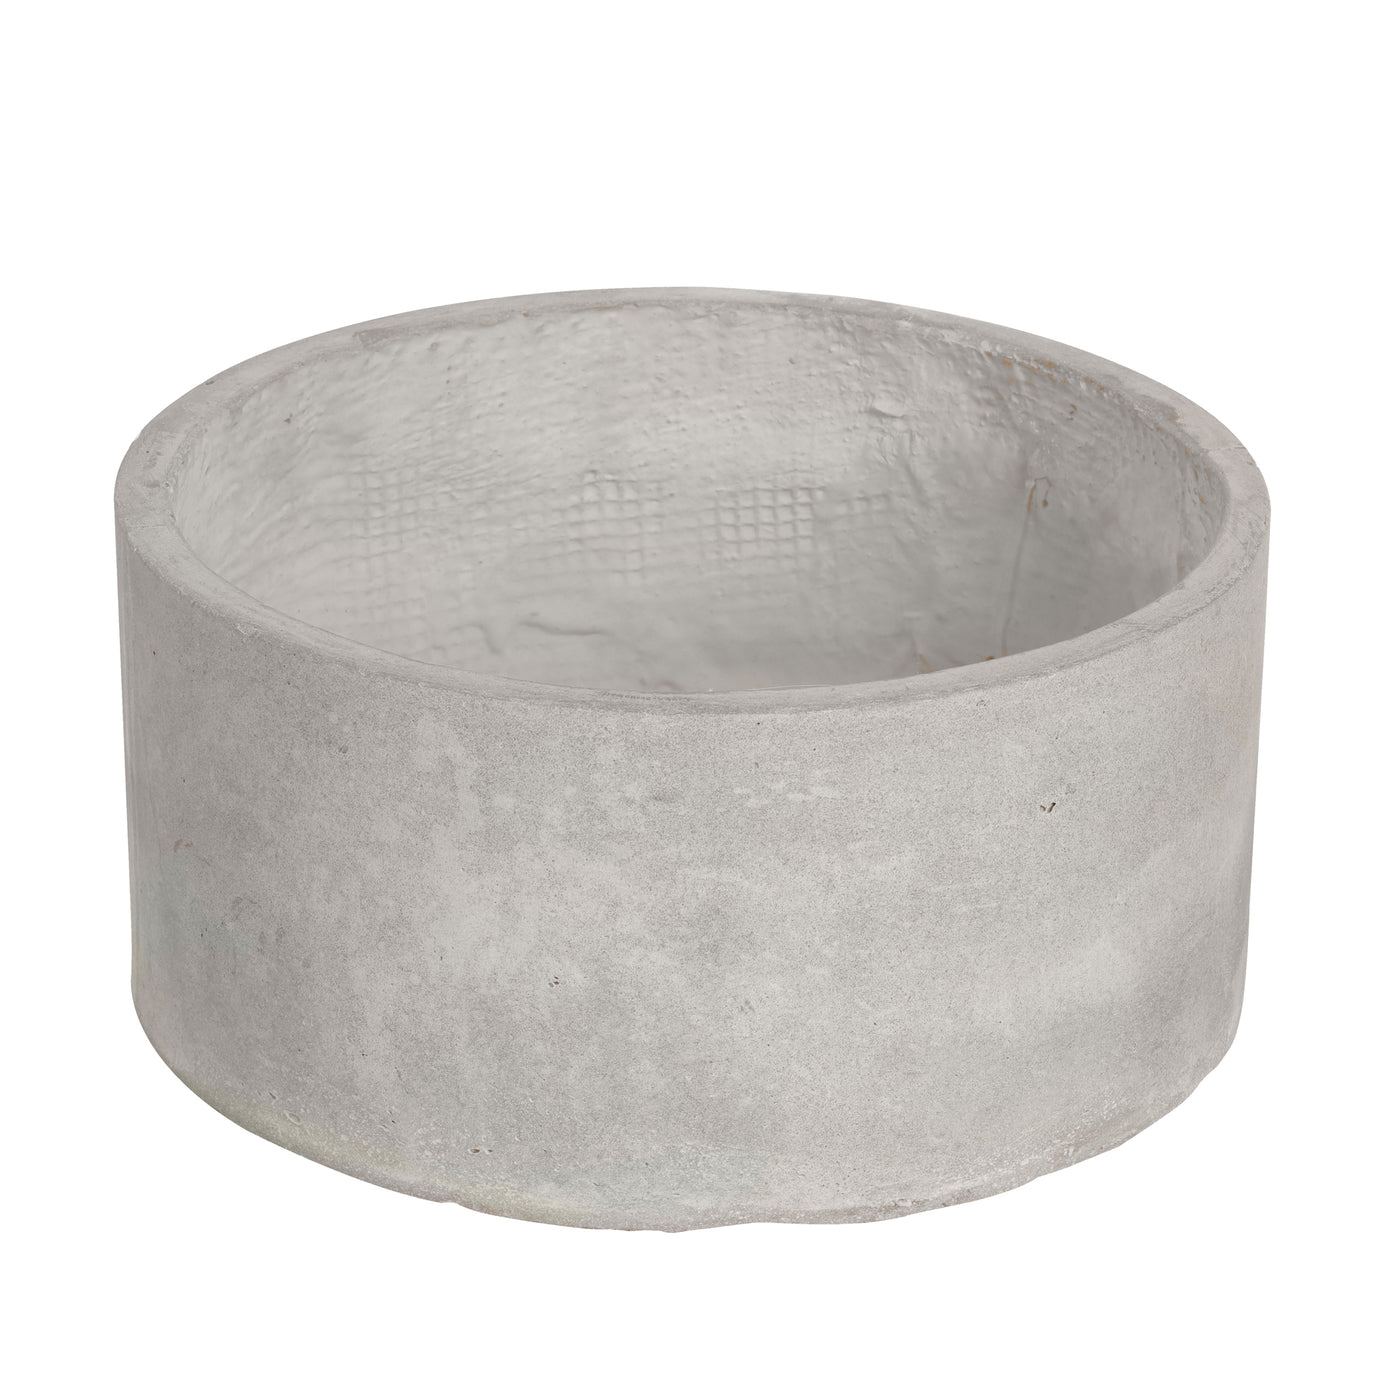 Round fiberclay pot in light grey